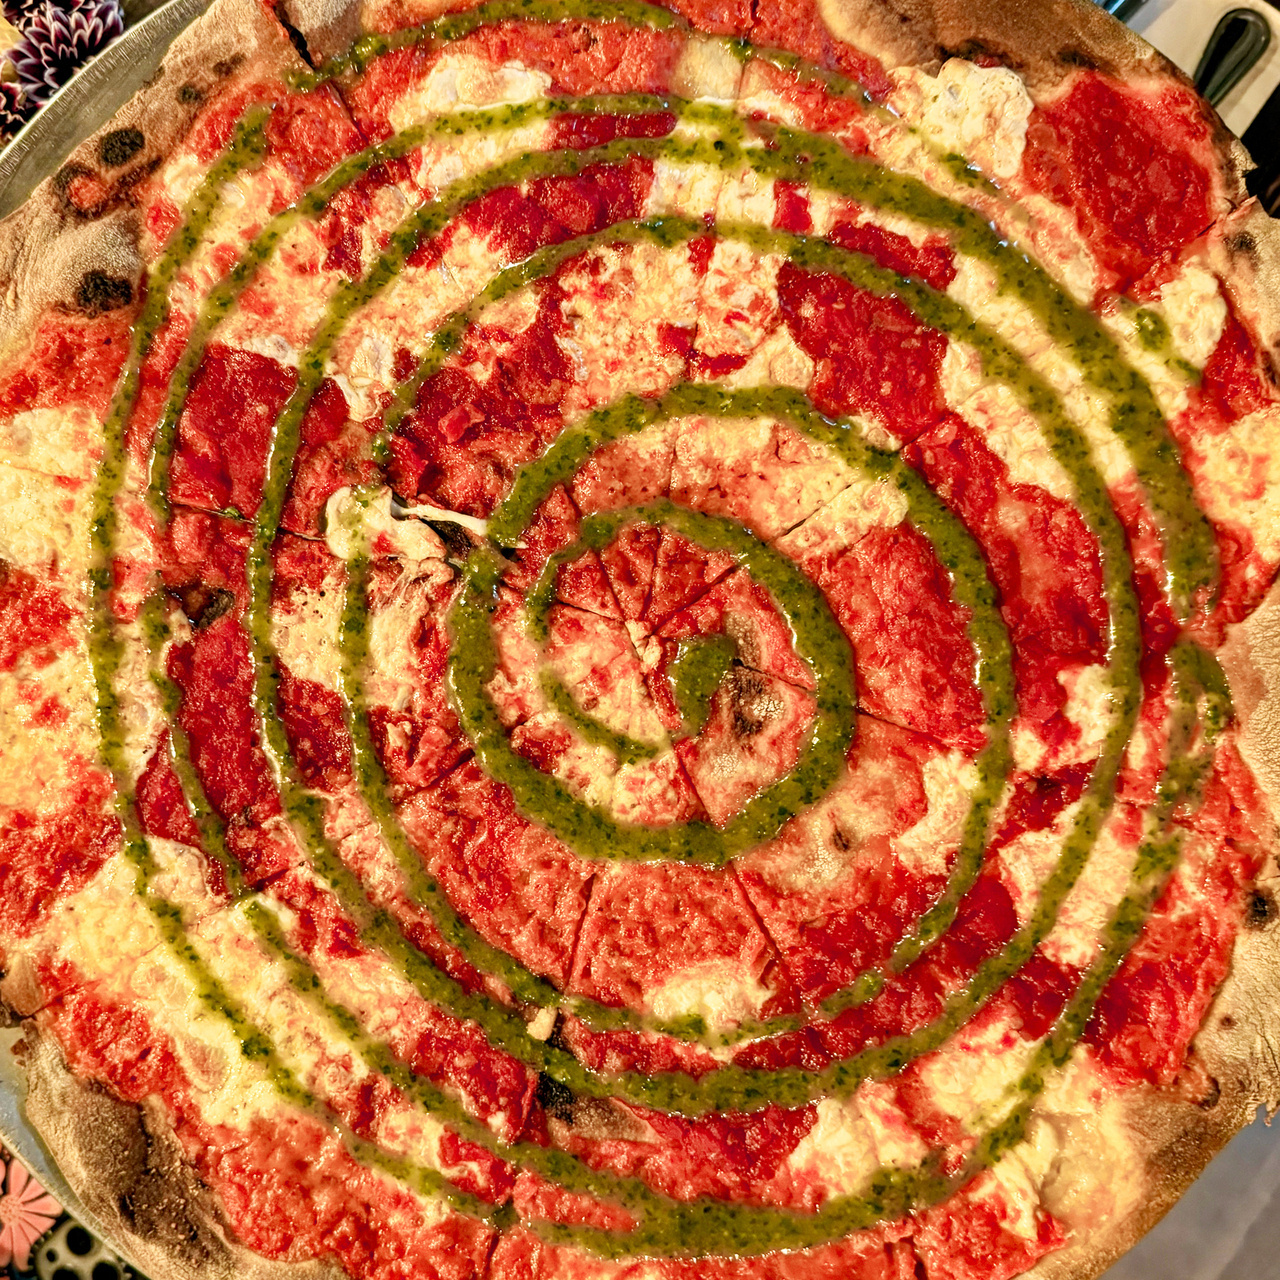 Pizza with vodka sauce, tomato sauce, fresh mozzarella, and a spiral of pesto sauce